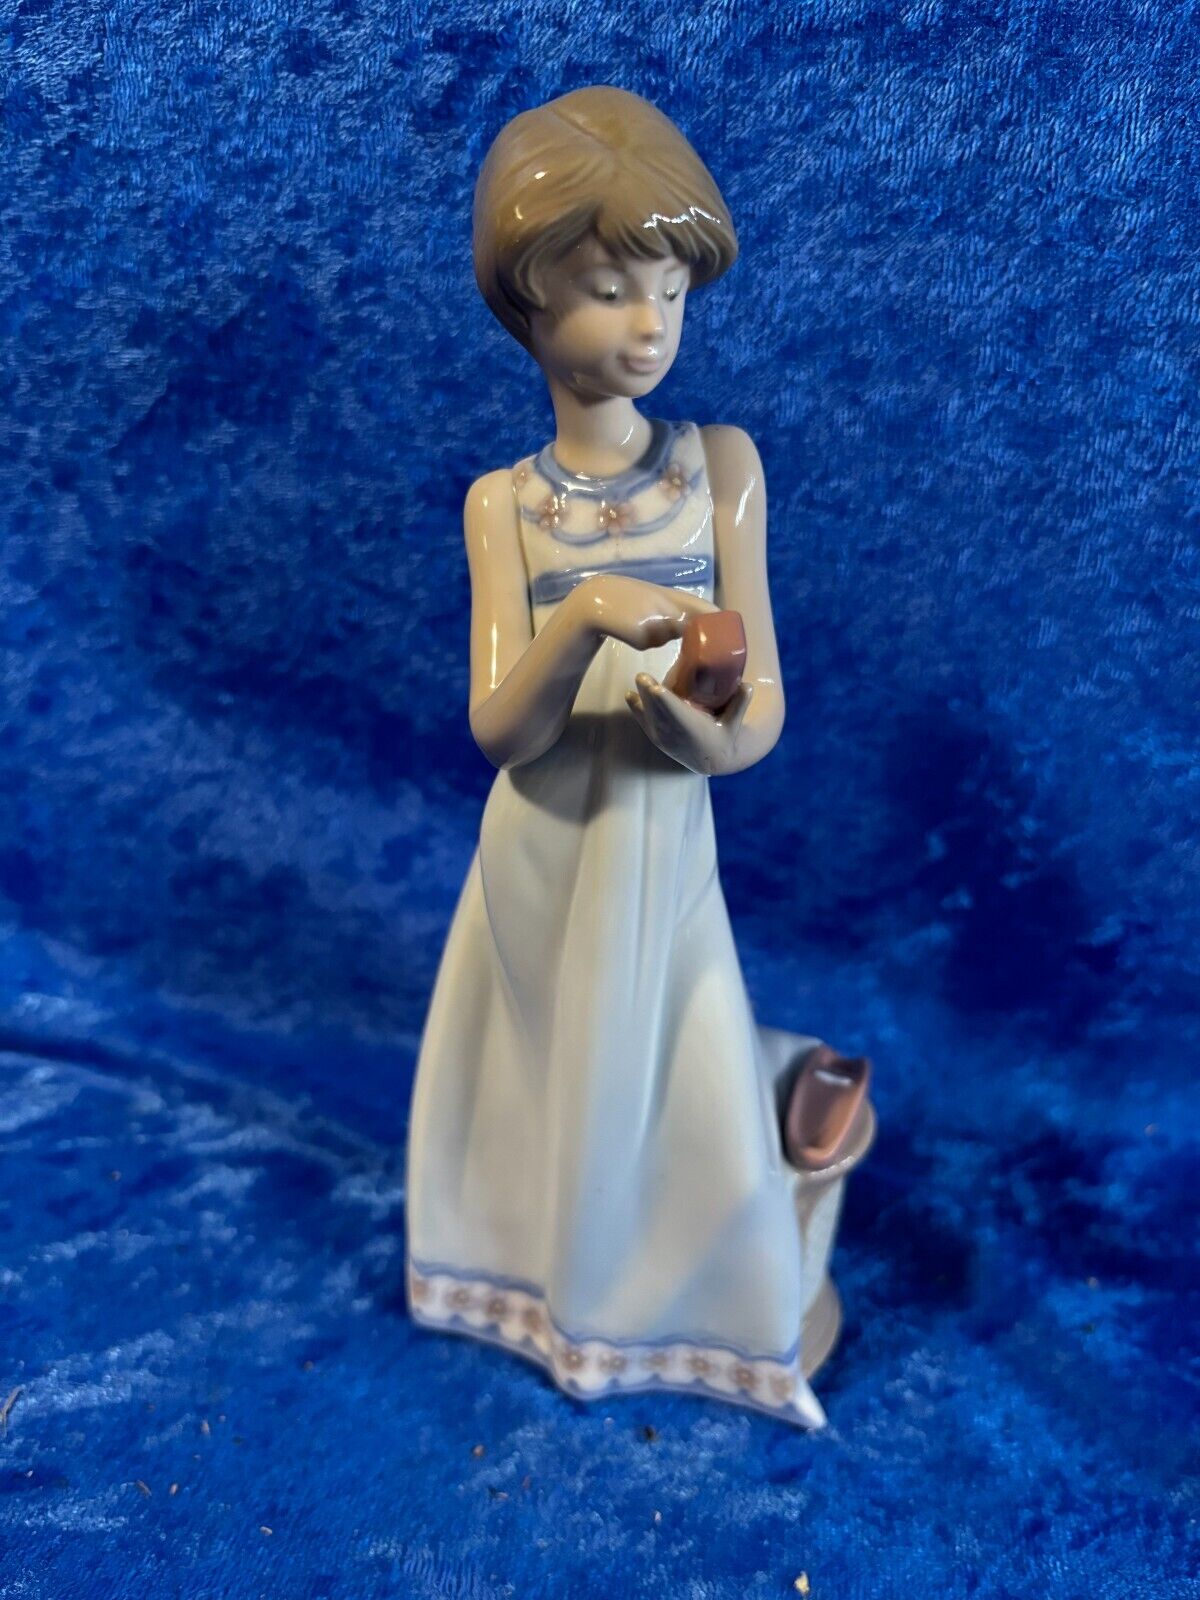 Vintage Lladro Figurine CALLING A FRIEND Girl with Telephone Phone #5607 MIB